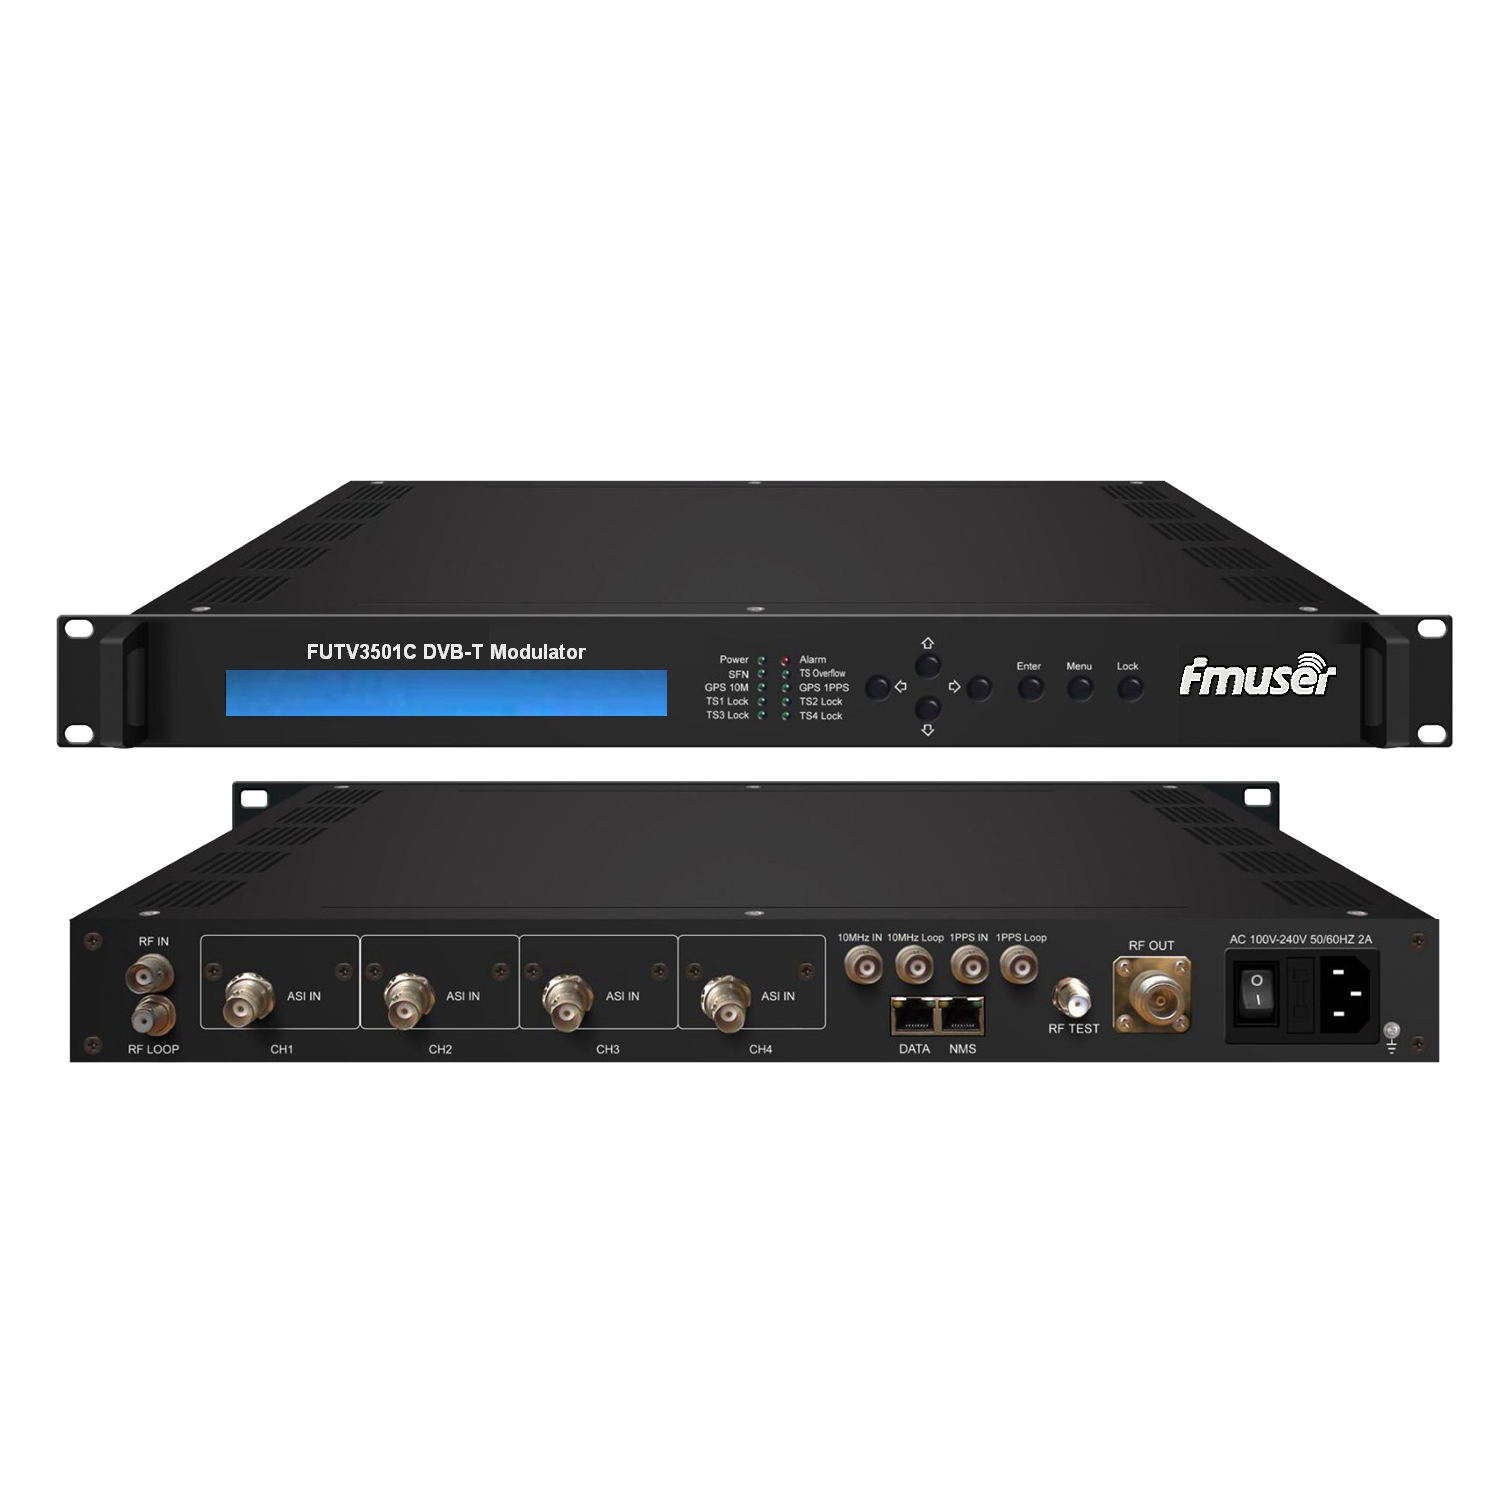 FMUSER FUTV3501C DVB-T Modulator(4*ASI in,1*RF DPD out，DVB-T standard)with remote control